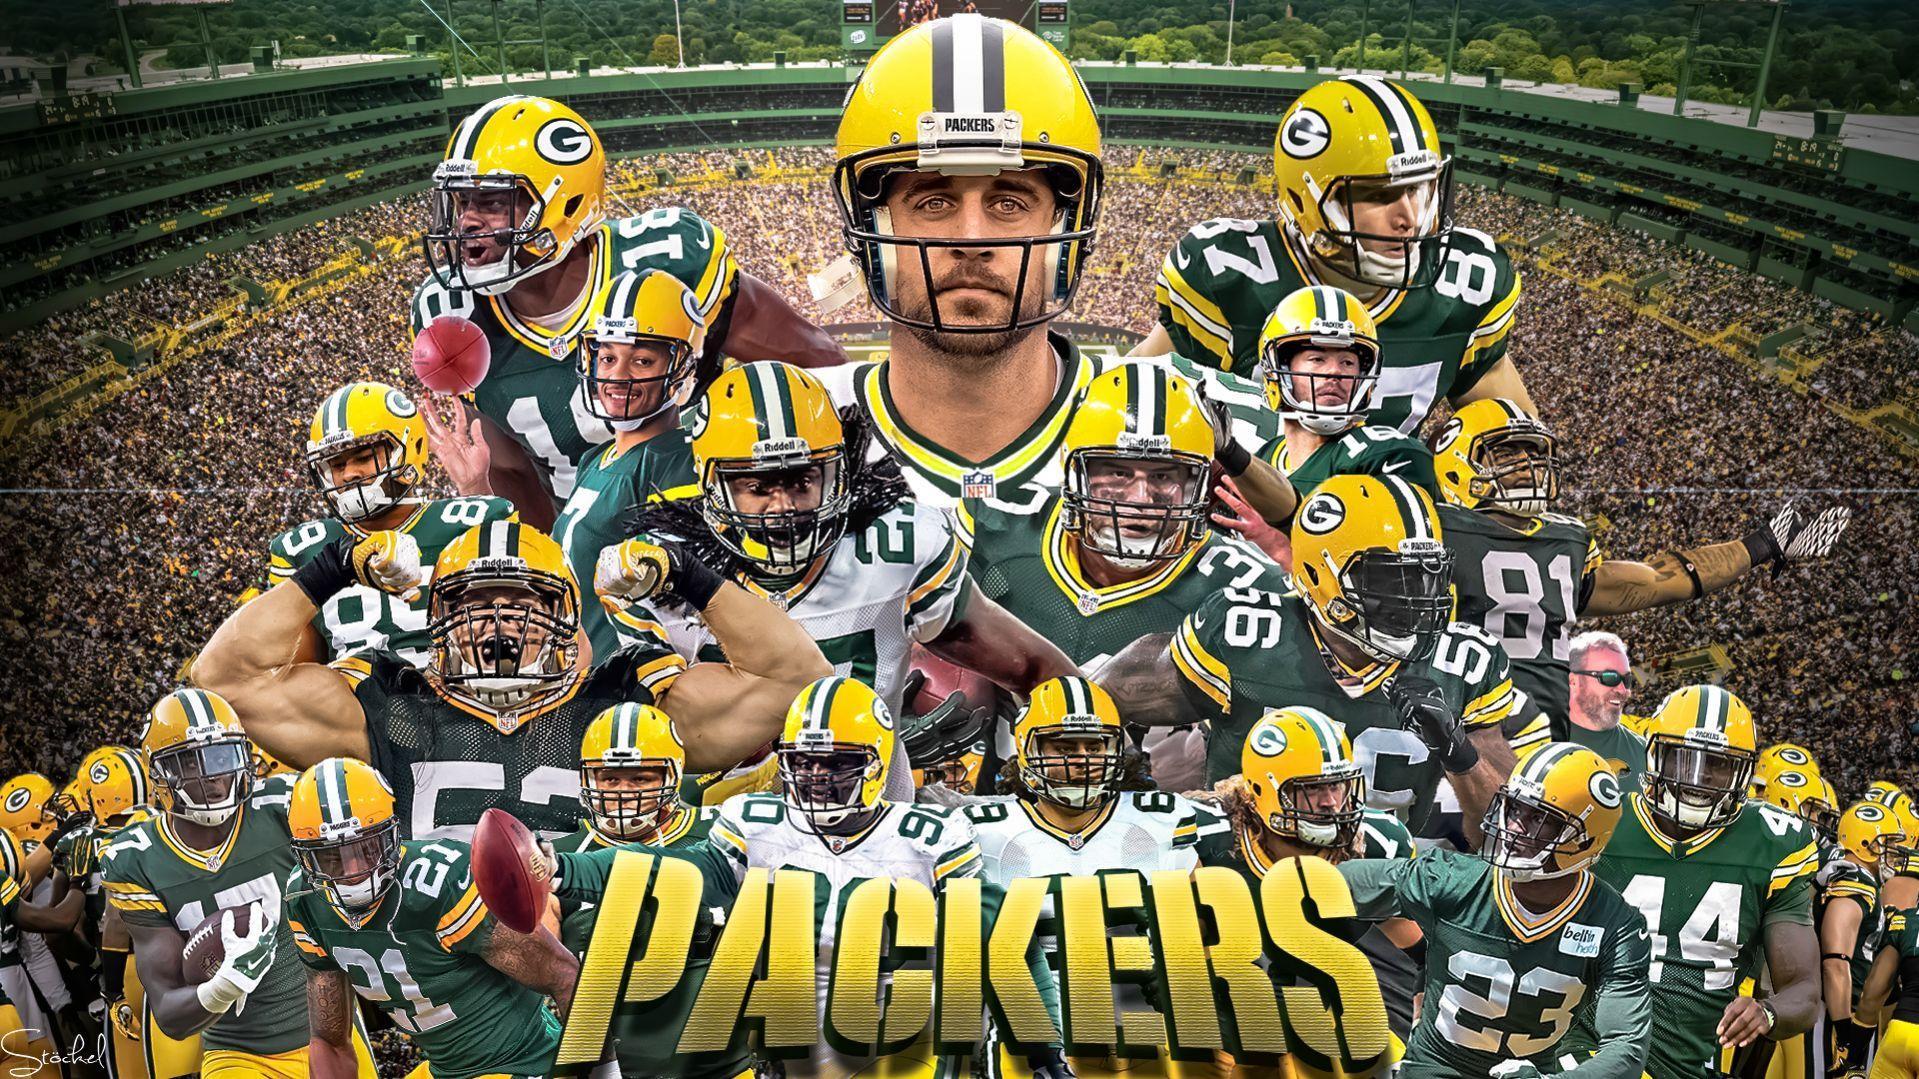 Packers wallpaper